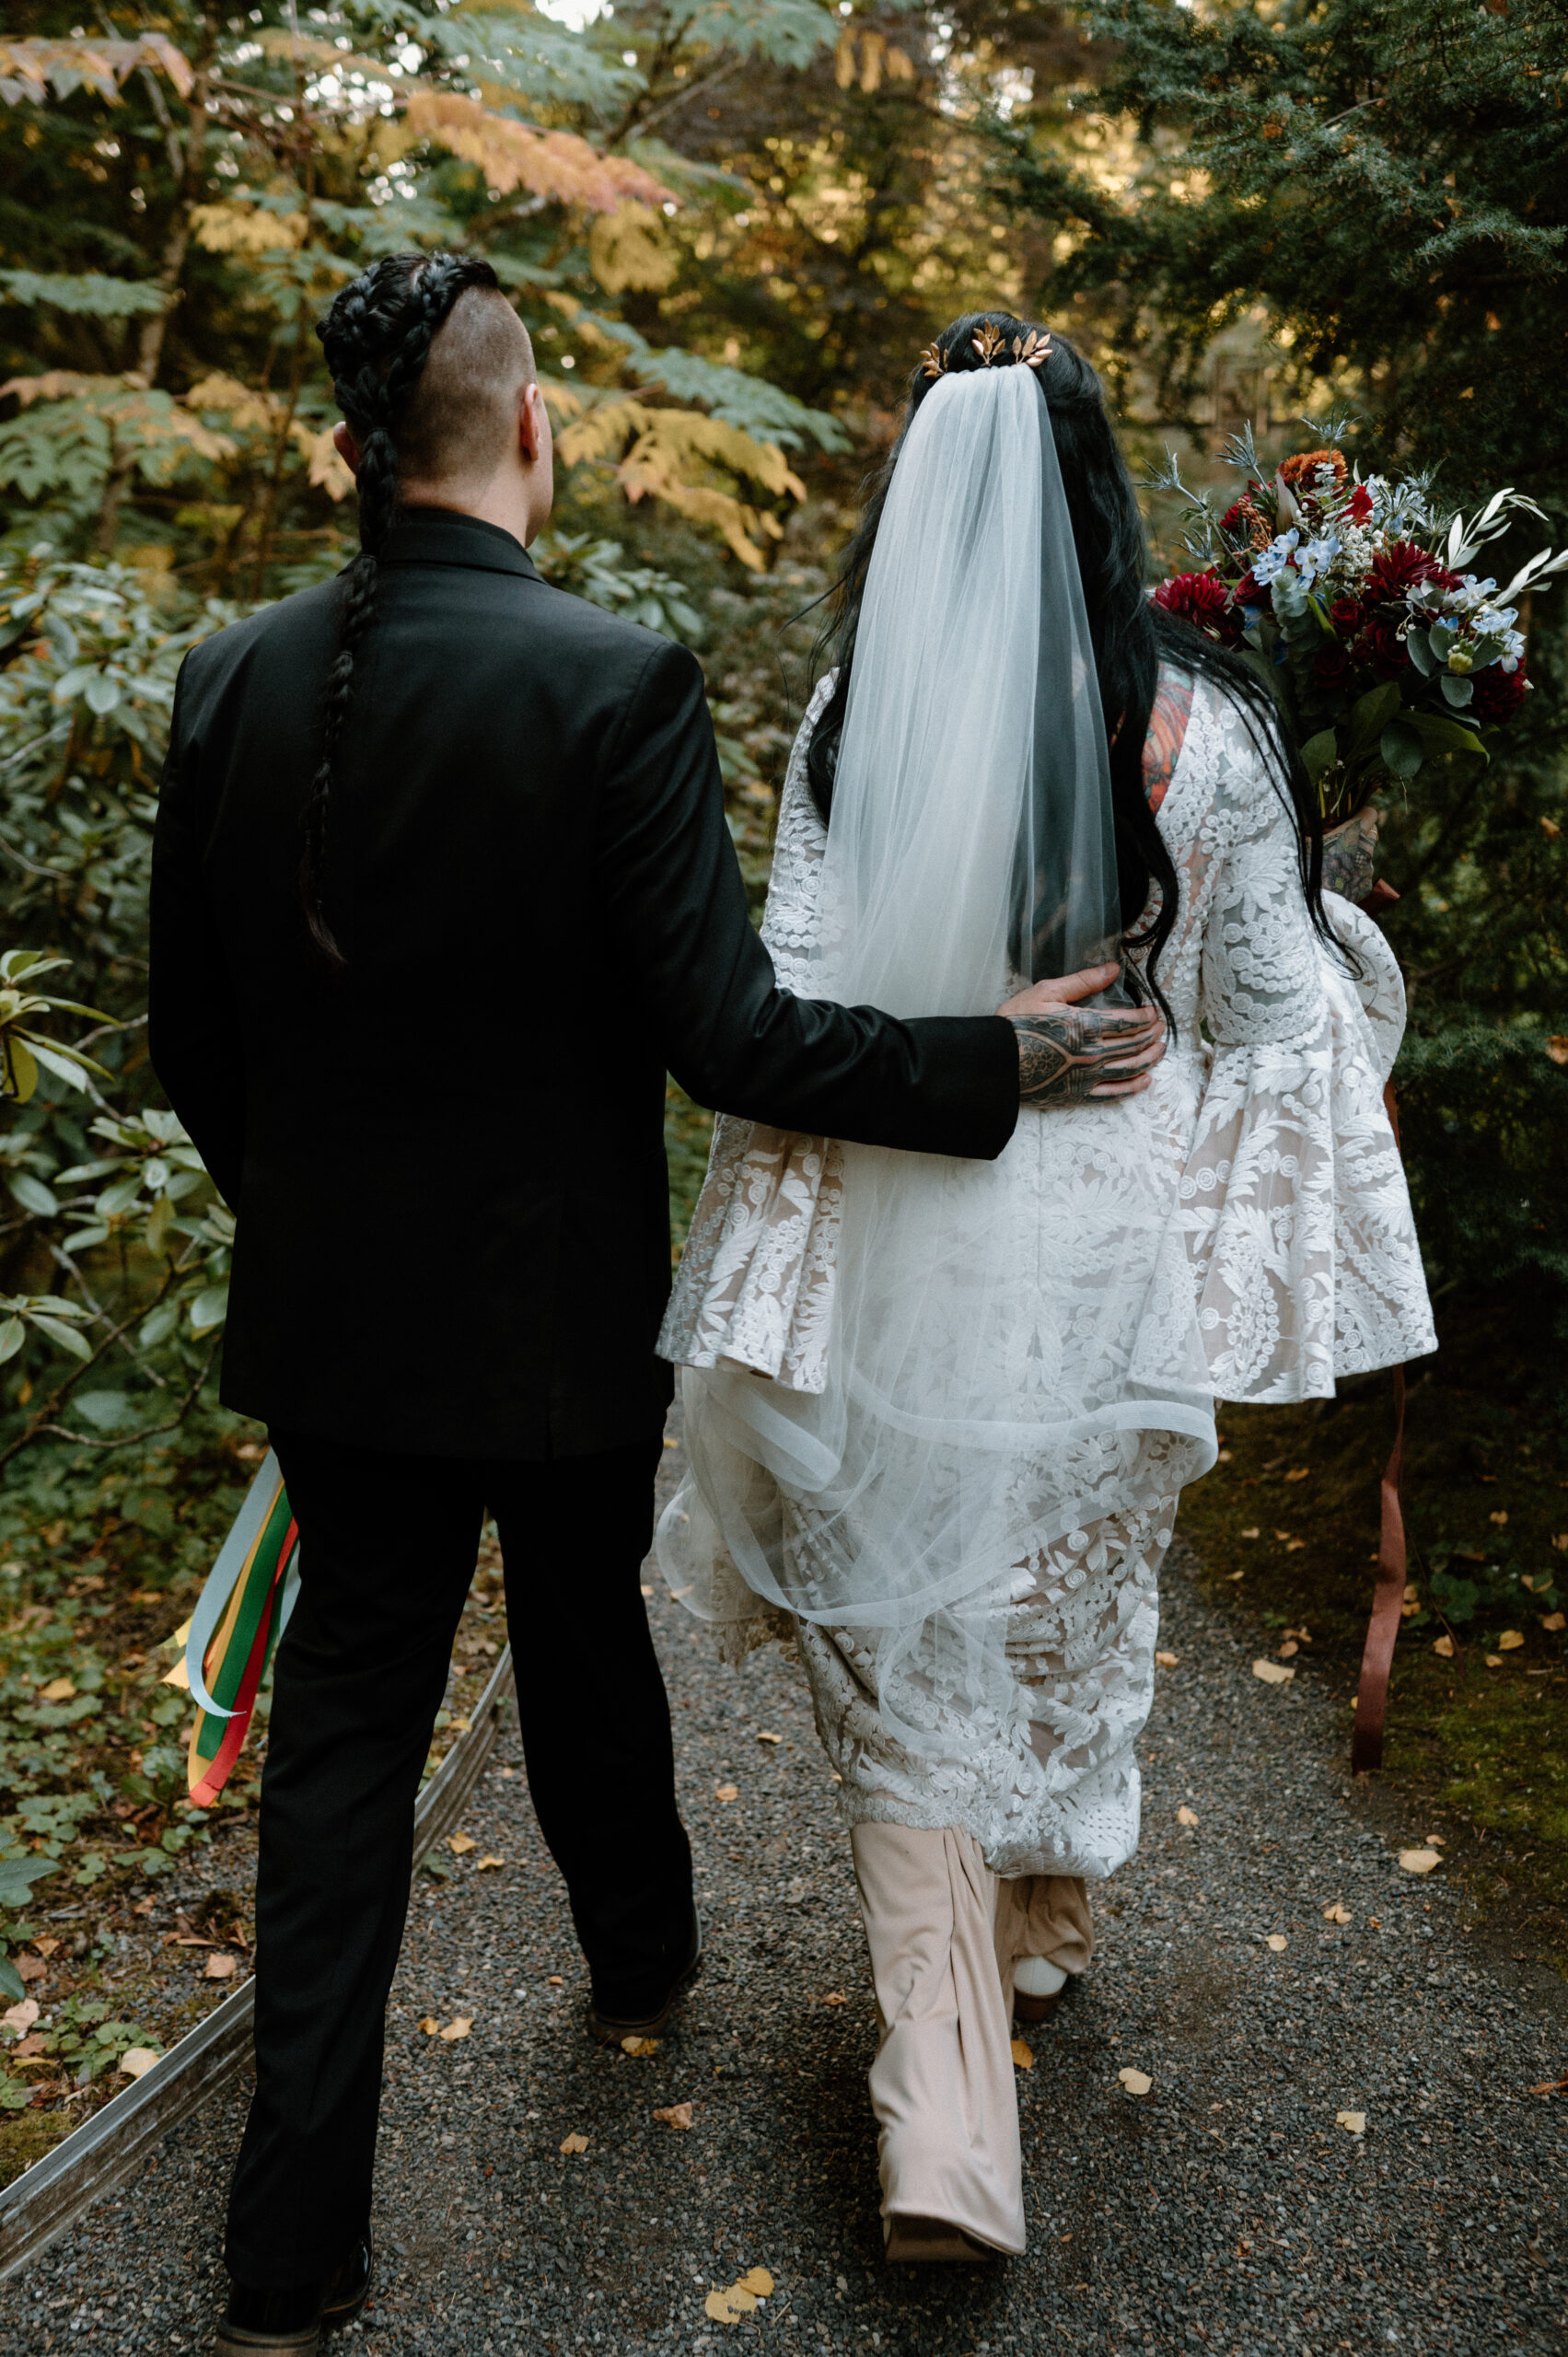 Portland or fall wedding, Gothic Wedding photographer, Alternative couples, tattooed couples, Photography, Vancouver Wa Wedding Photographer, Wedding Photography Vancouver Wa